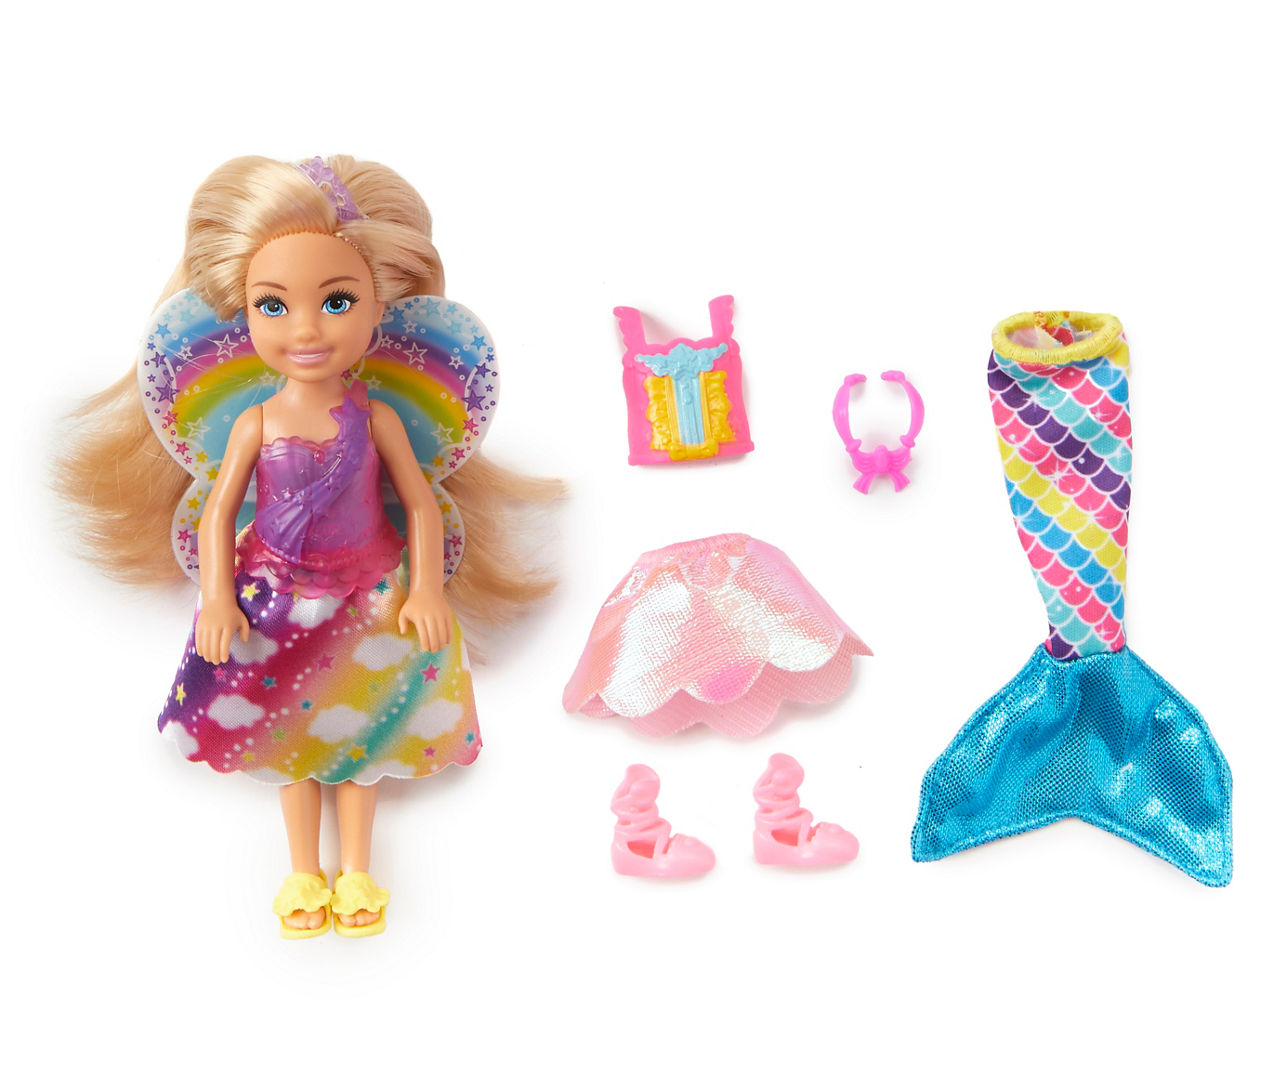 Barbie Dreamtopia Chelsea Fairytale Dress-Up Doll Set | Big Lots